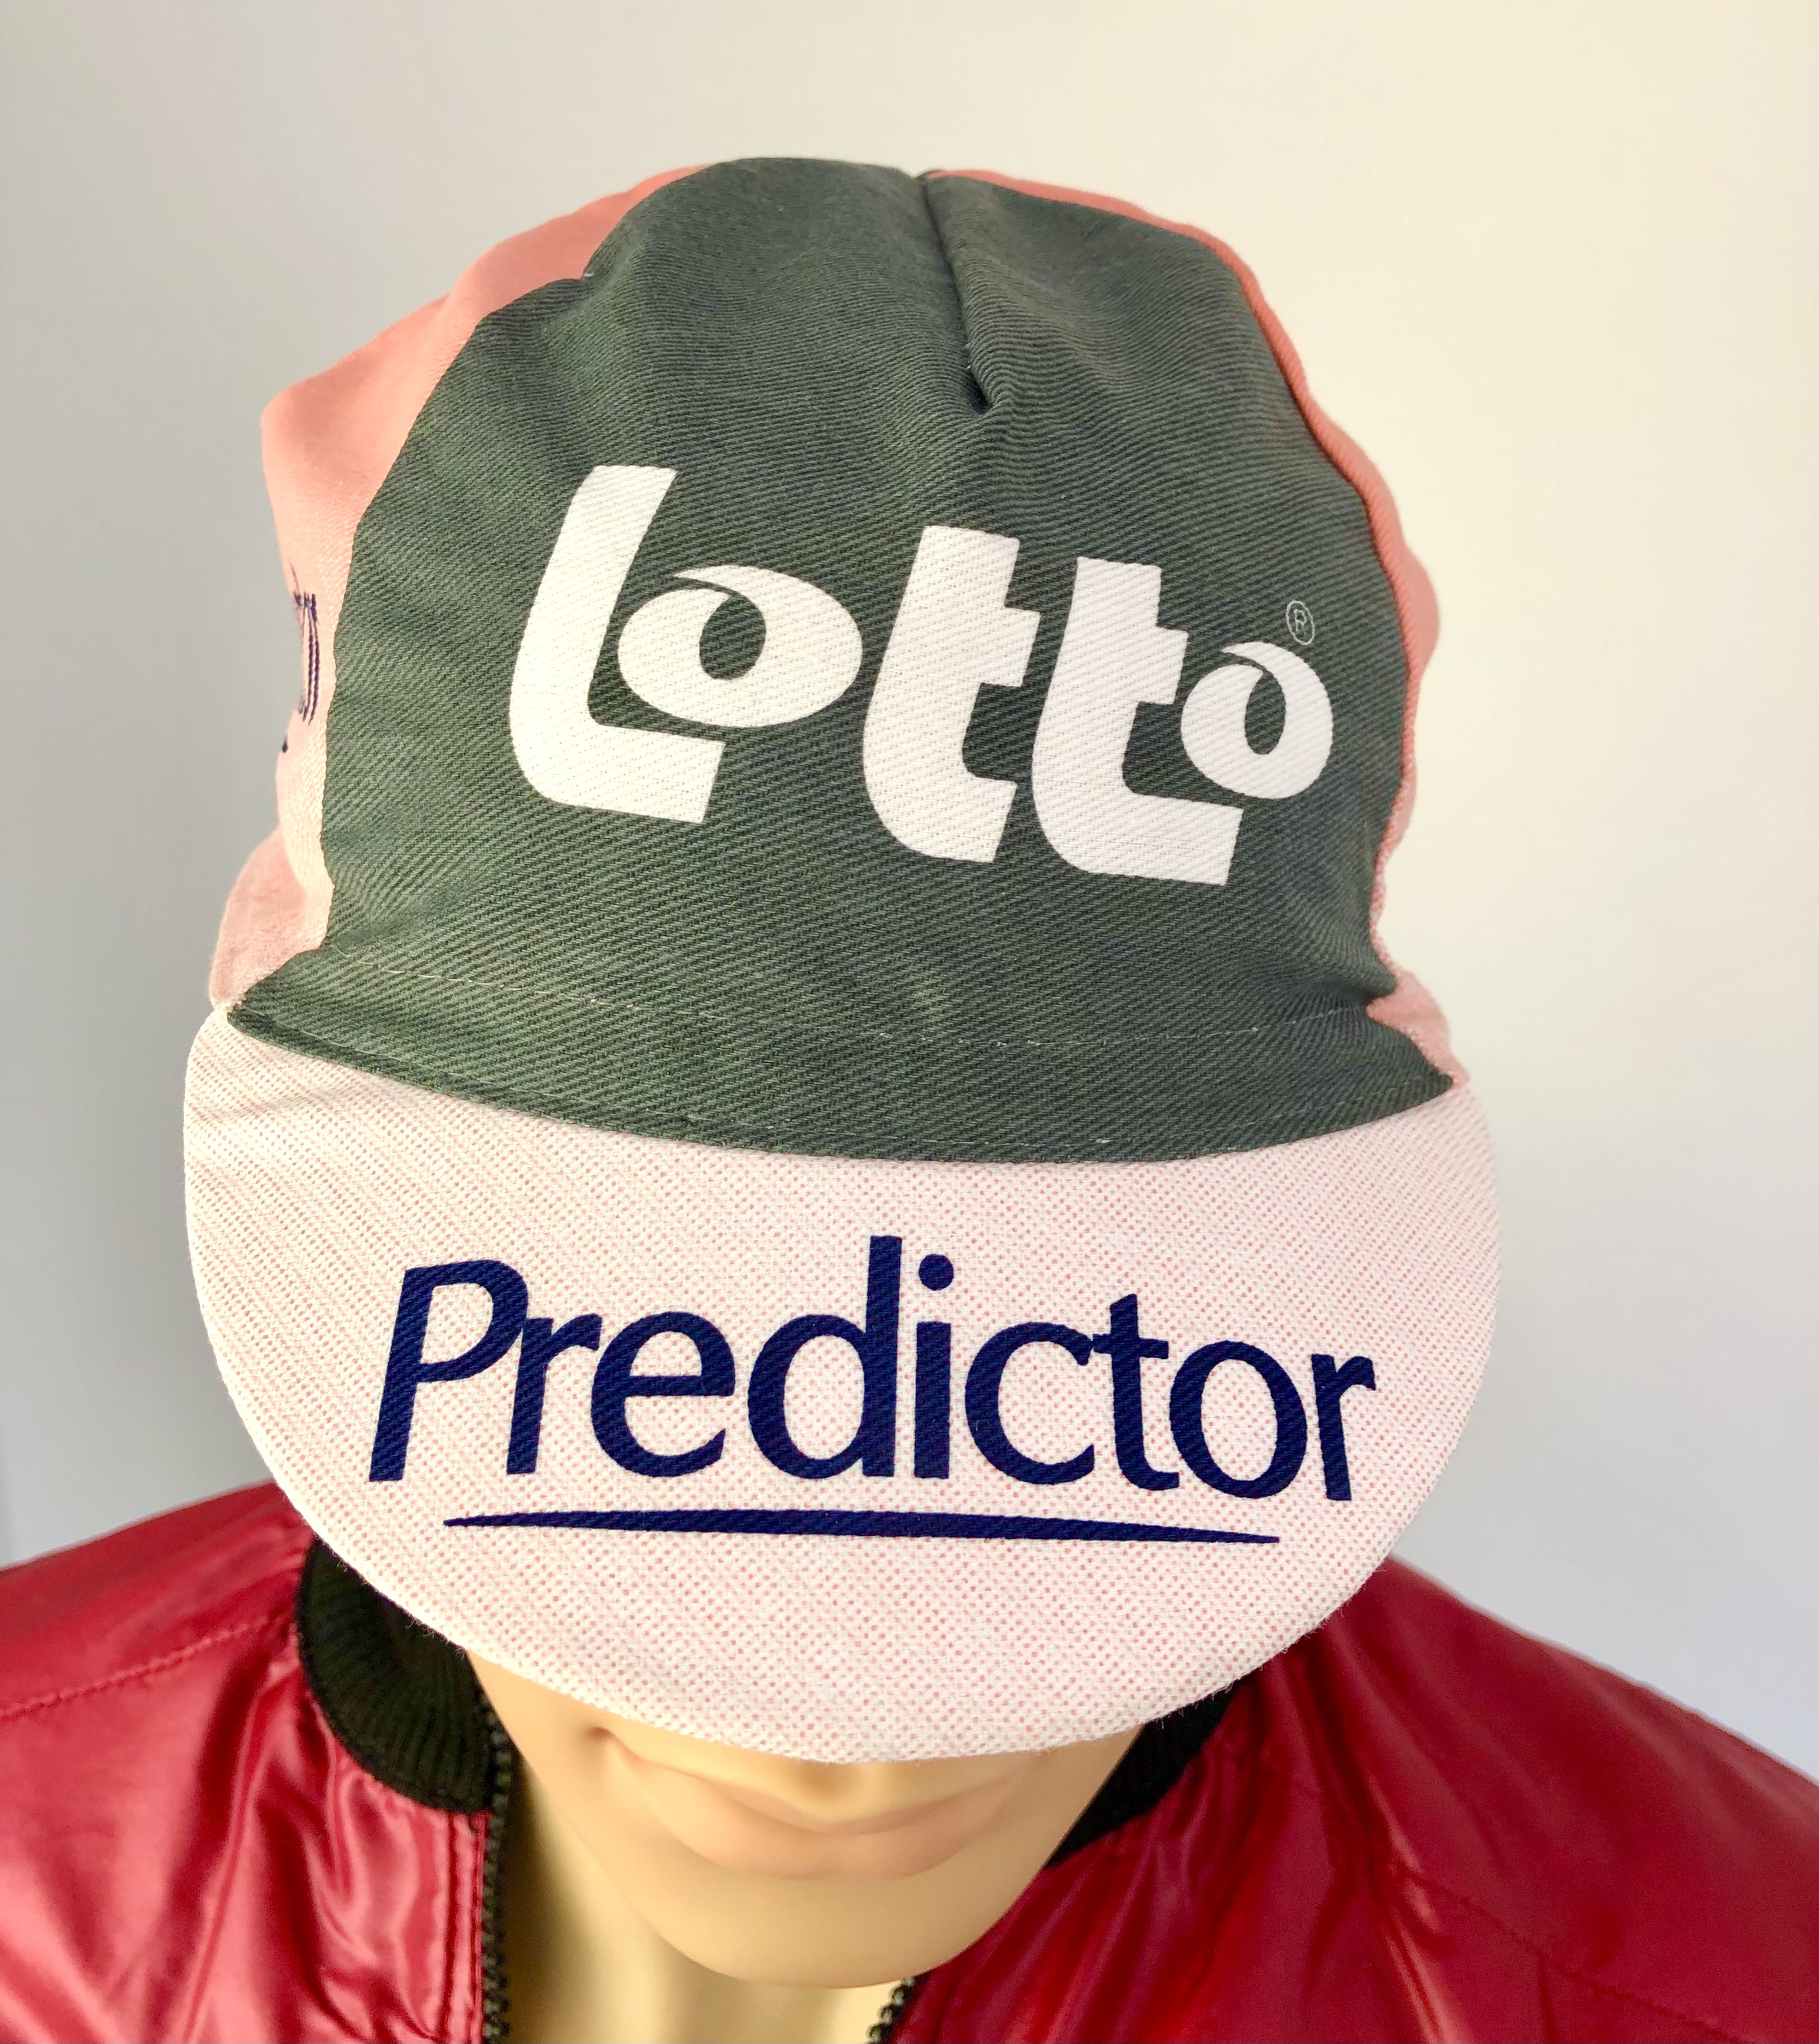 Cycling Cap Team Lotto- Predictor